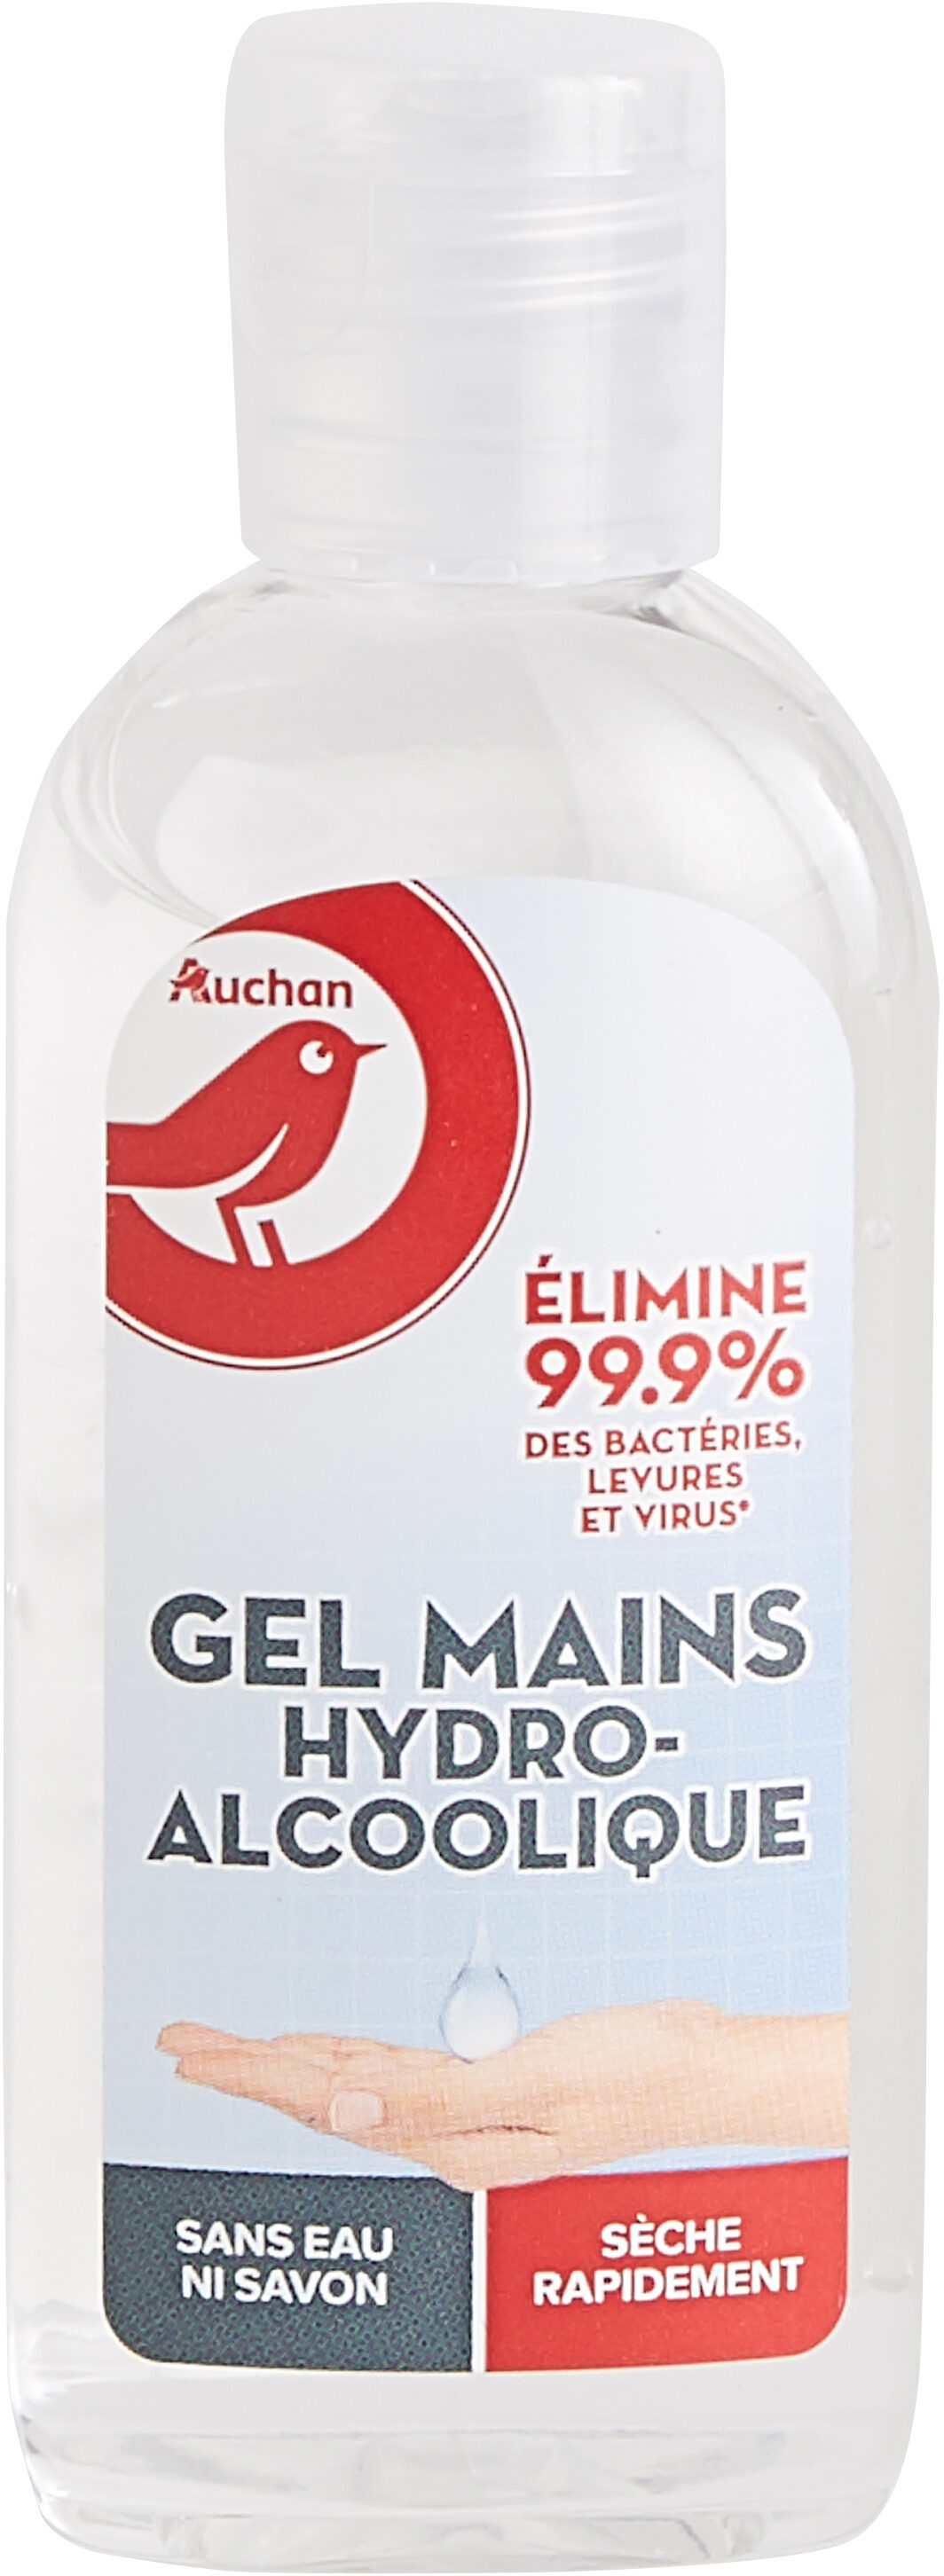 Gel mains hydroalcoolique - Produkto - fr